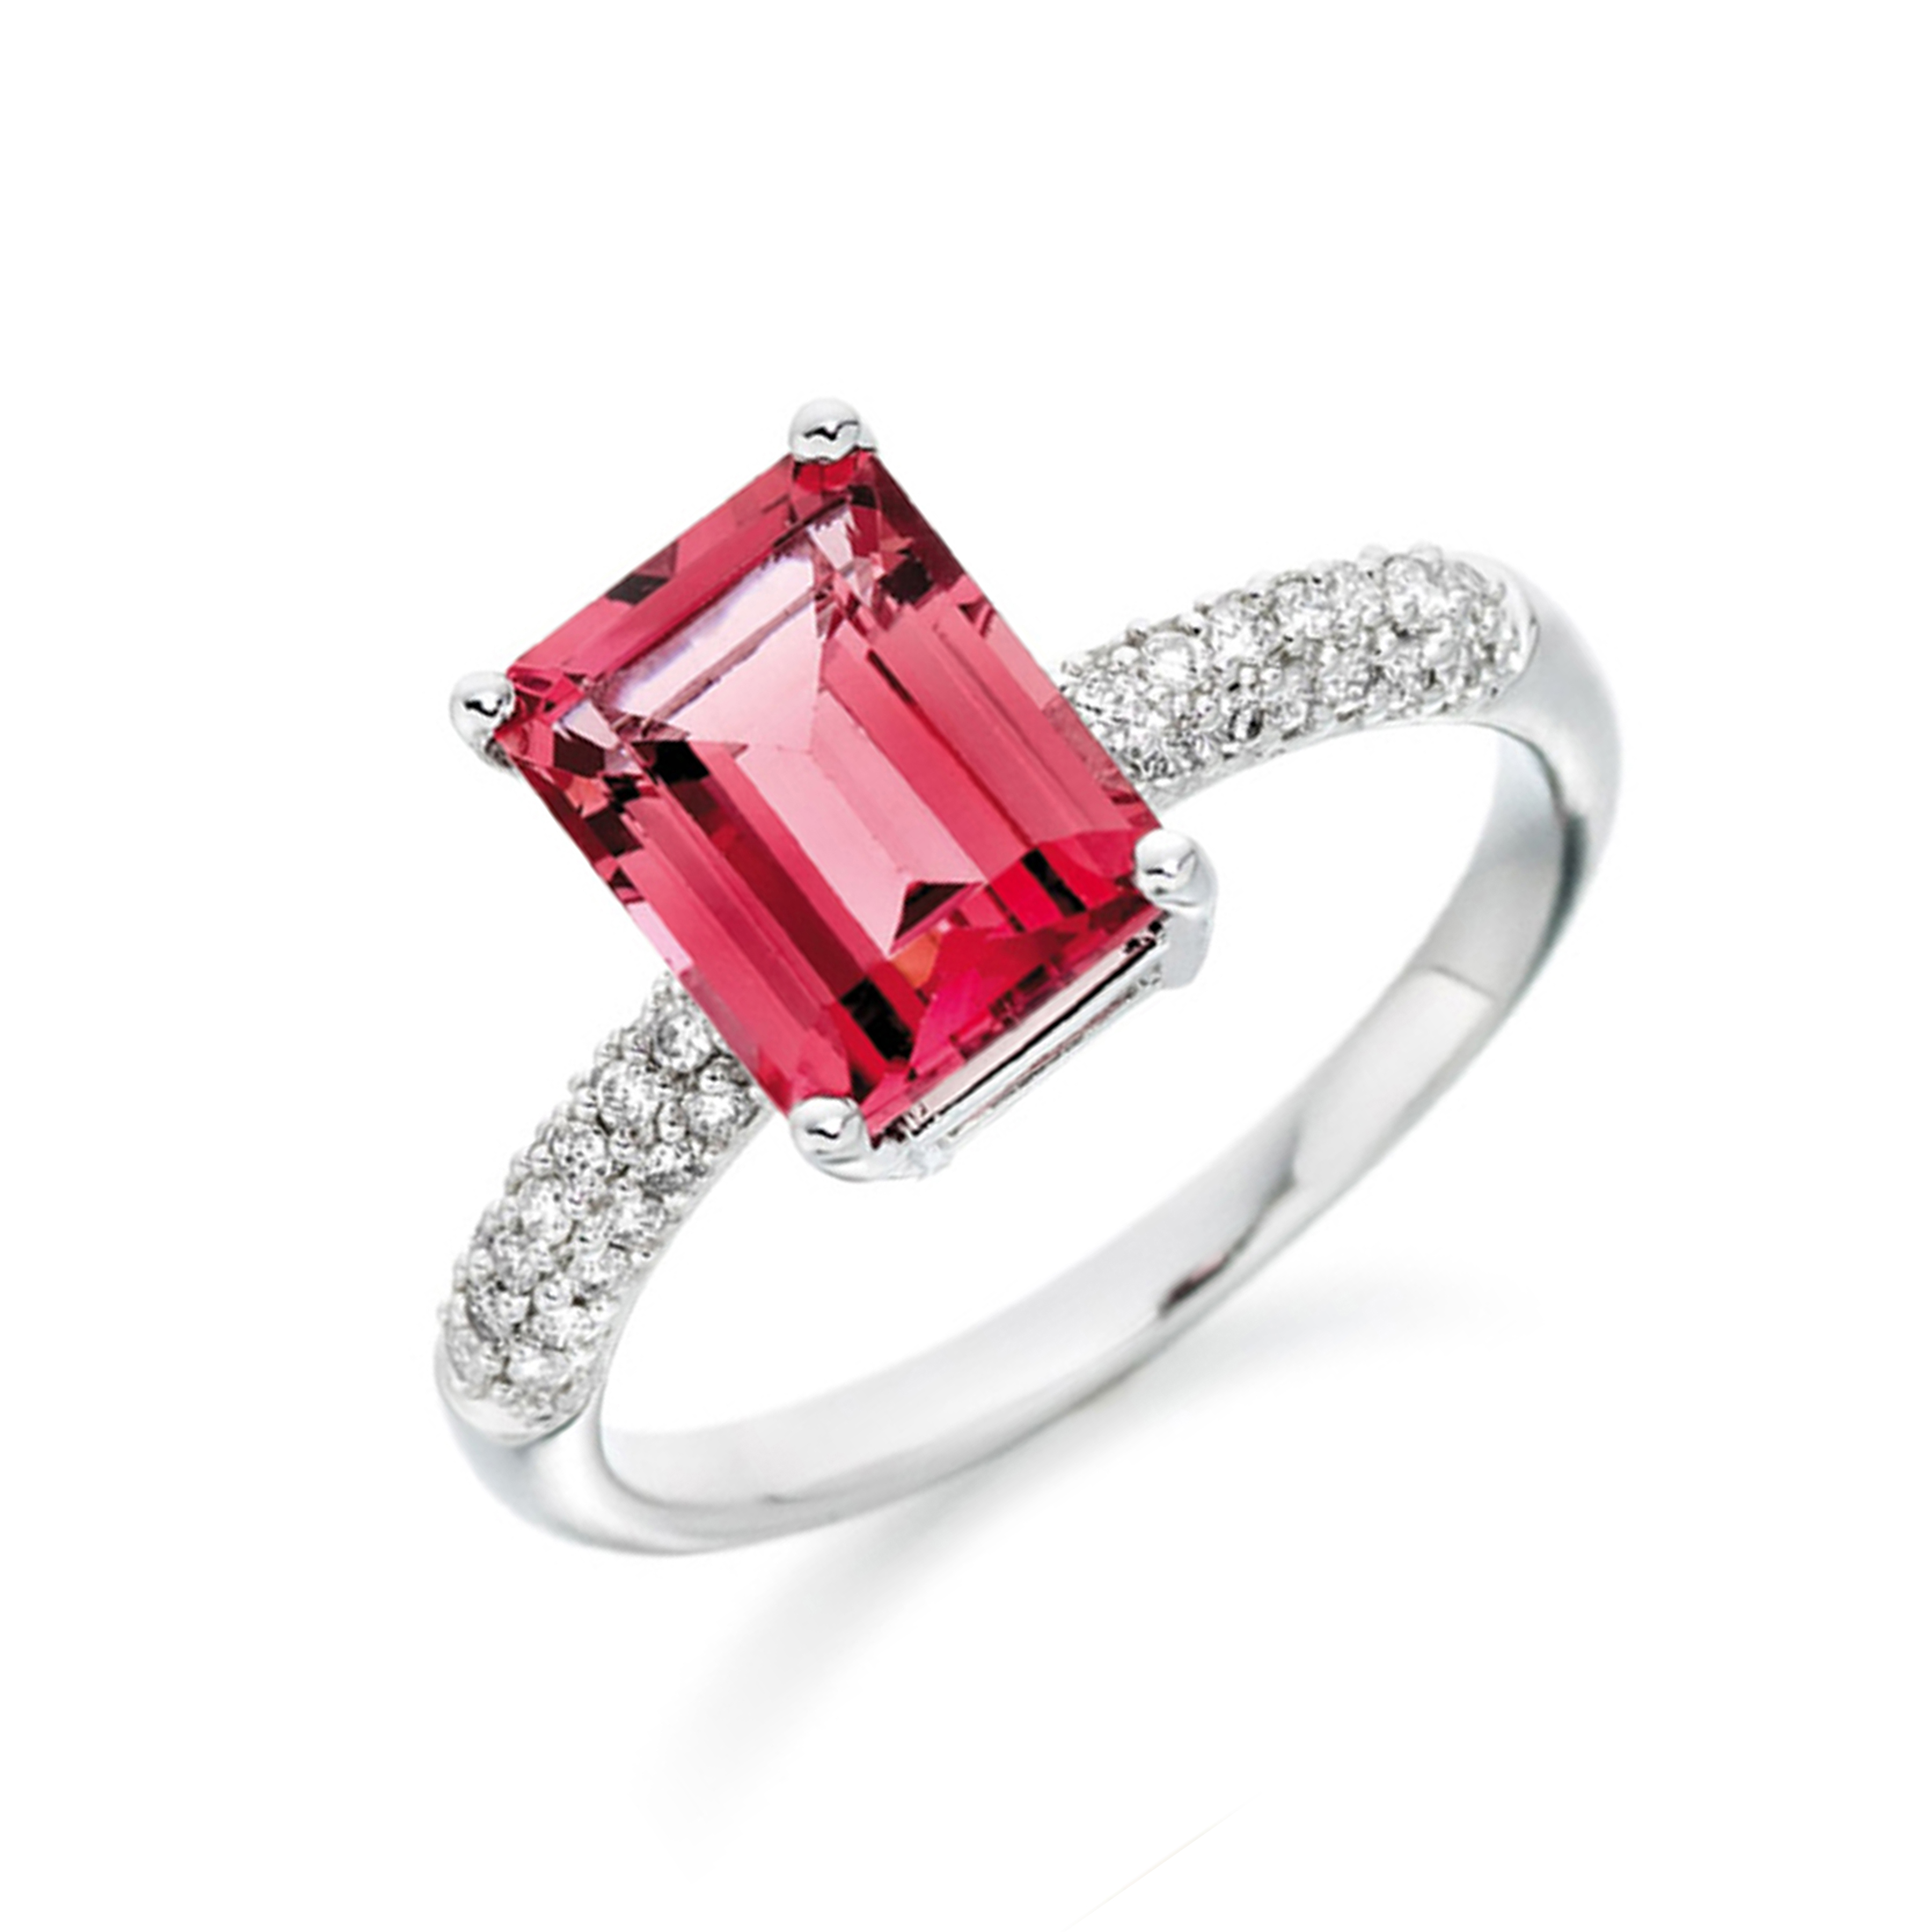 8X6mm Radiant Pink Tourmaline Stones On Shoulder Diamond And Gemstone Engagement Ring